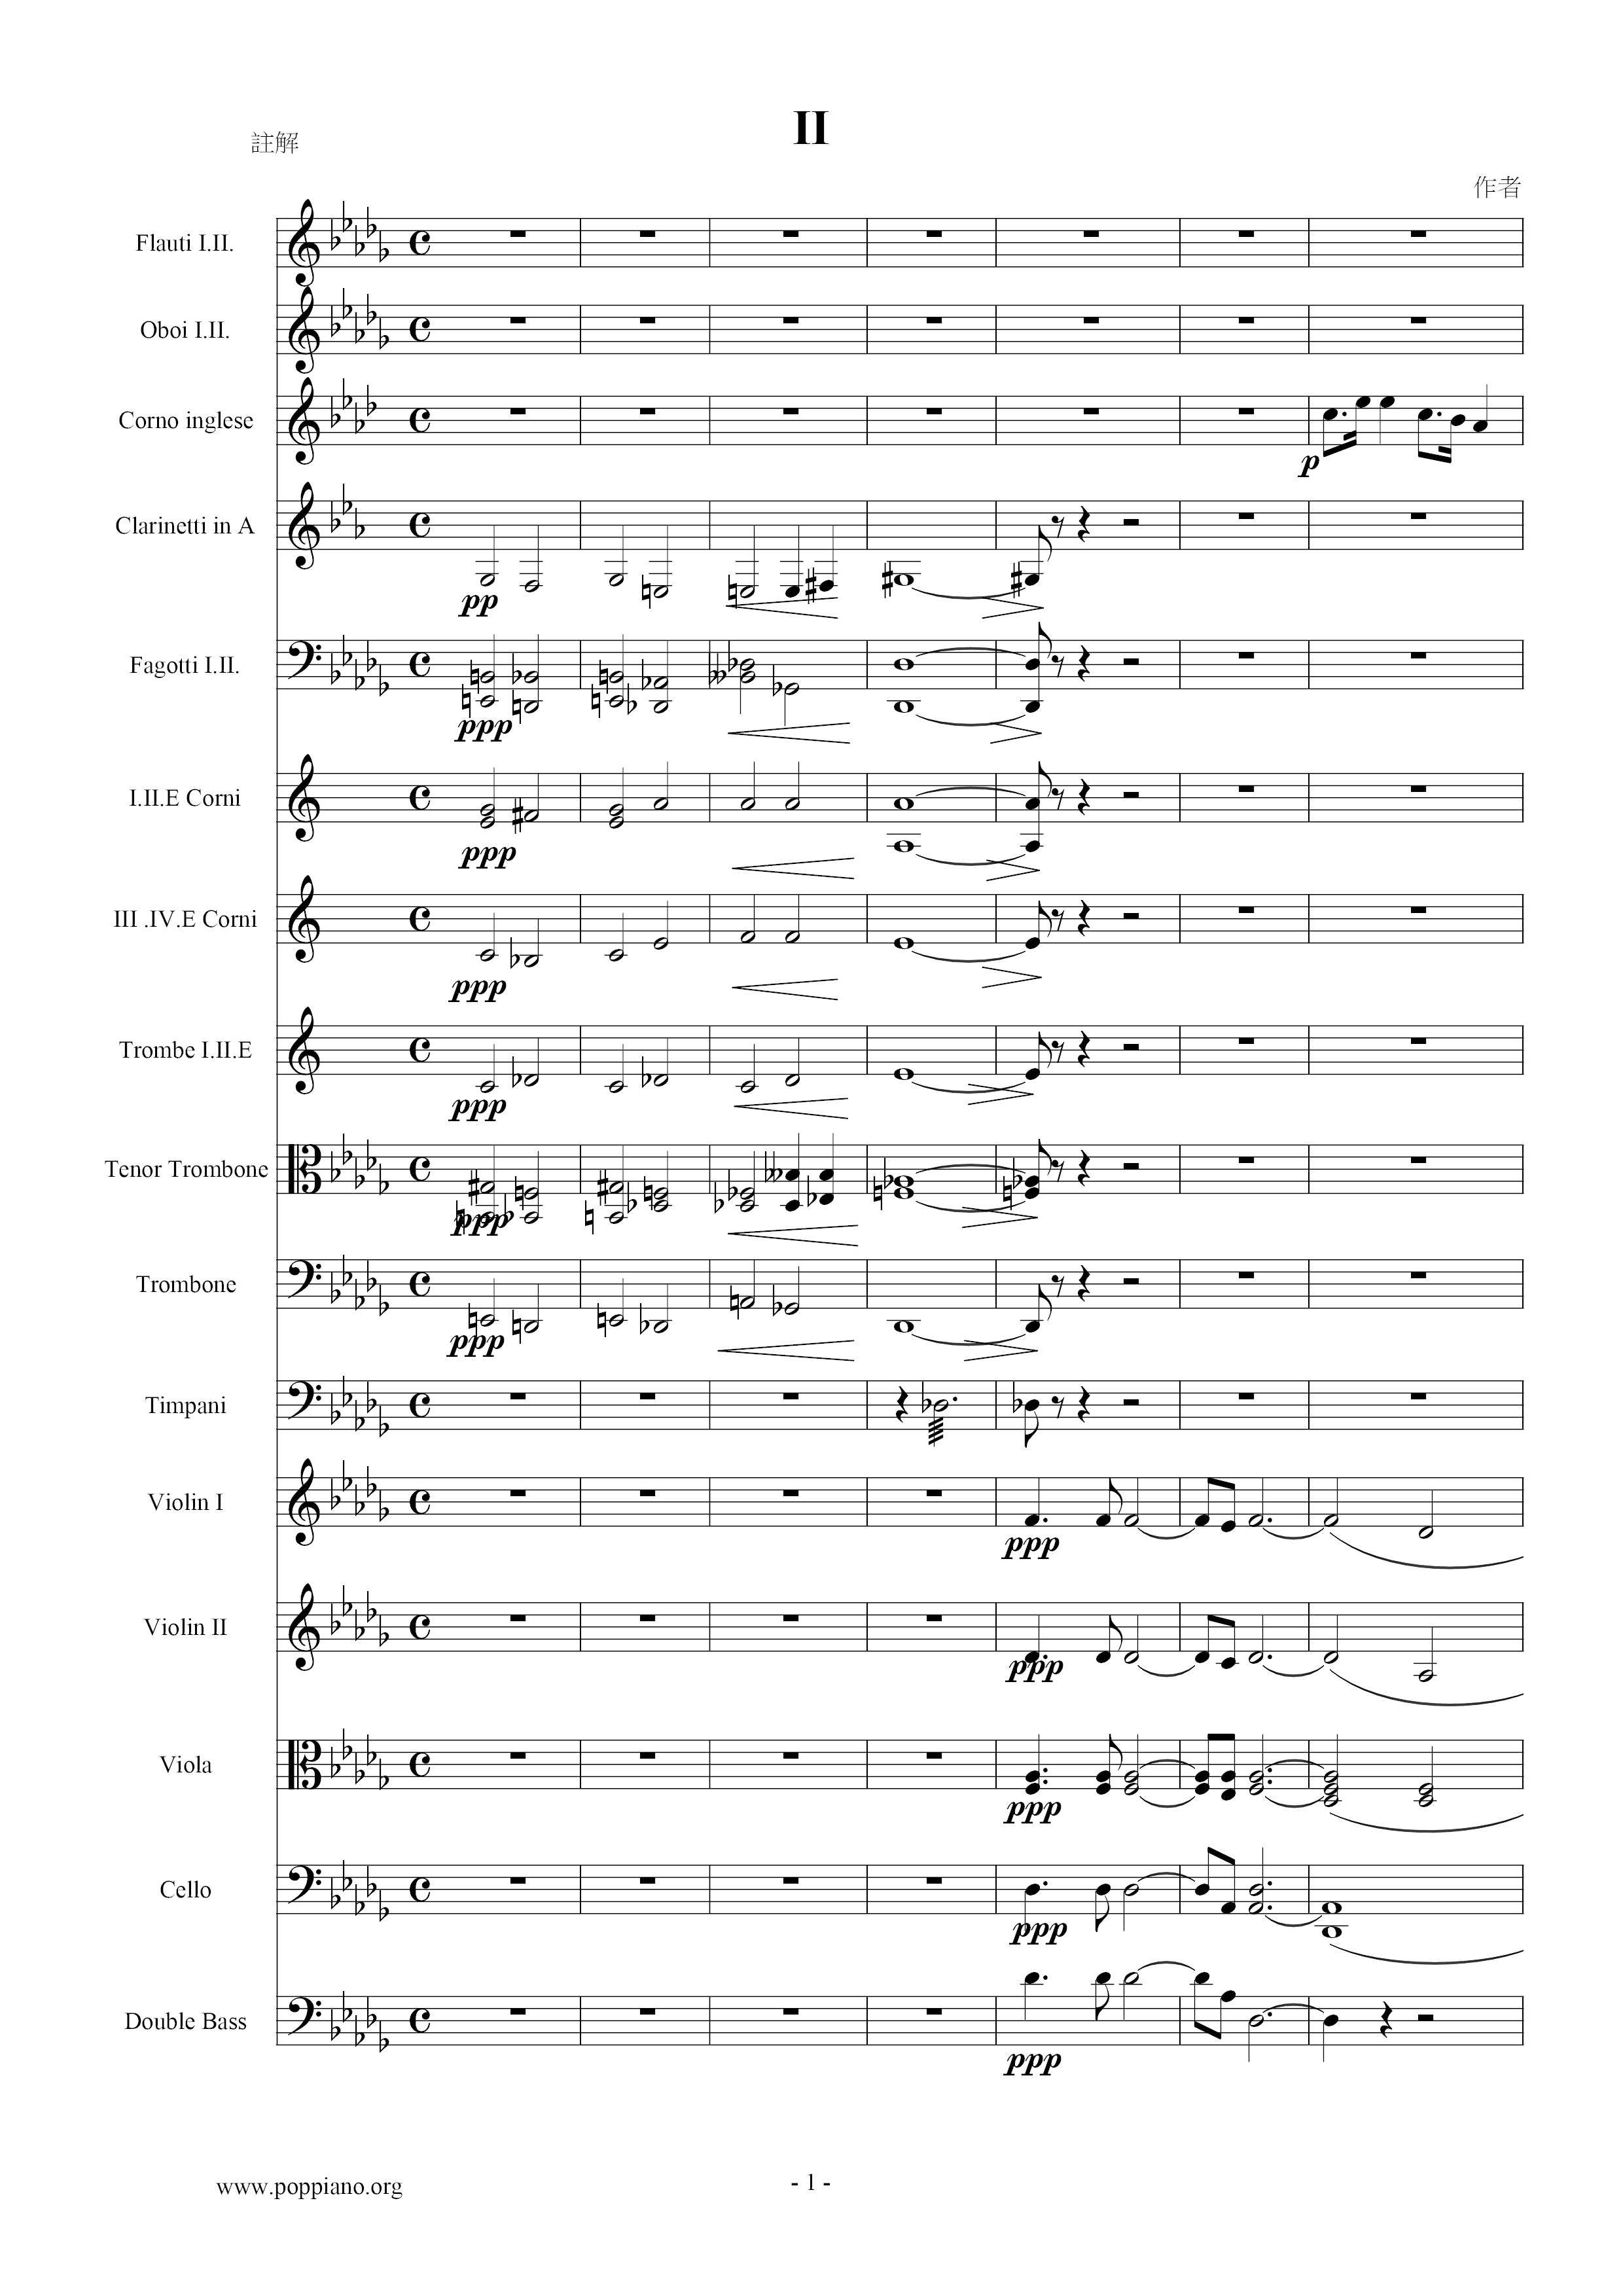 Symphony No.9 From The New World 2nd Mvt Score